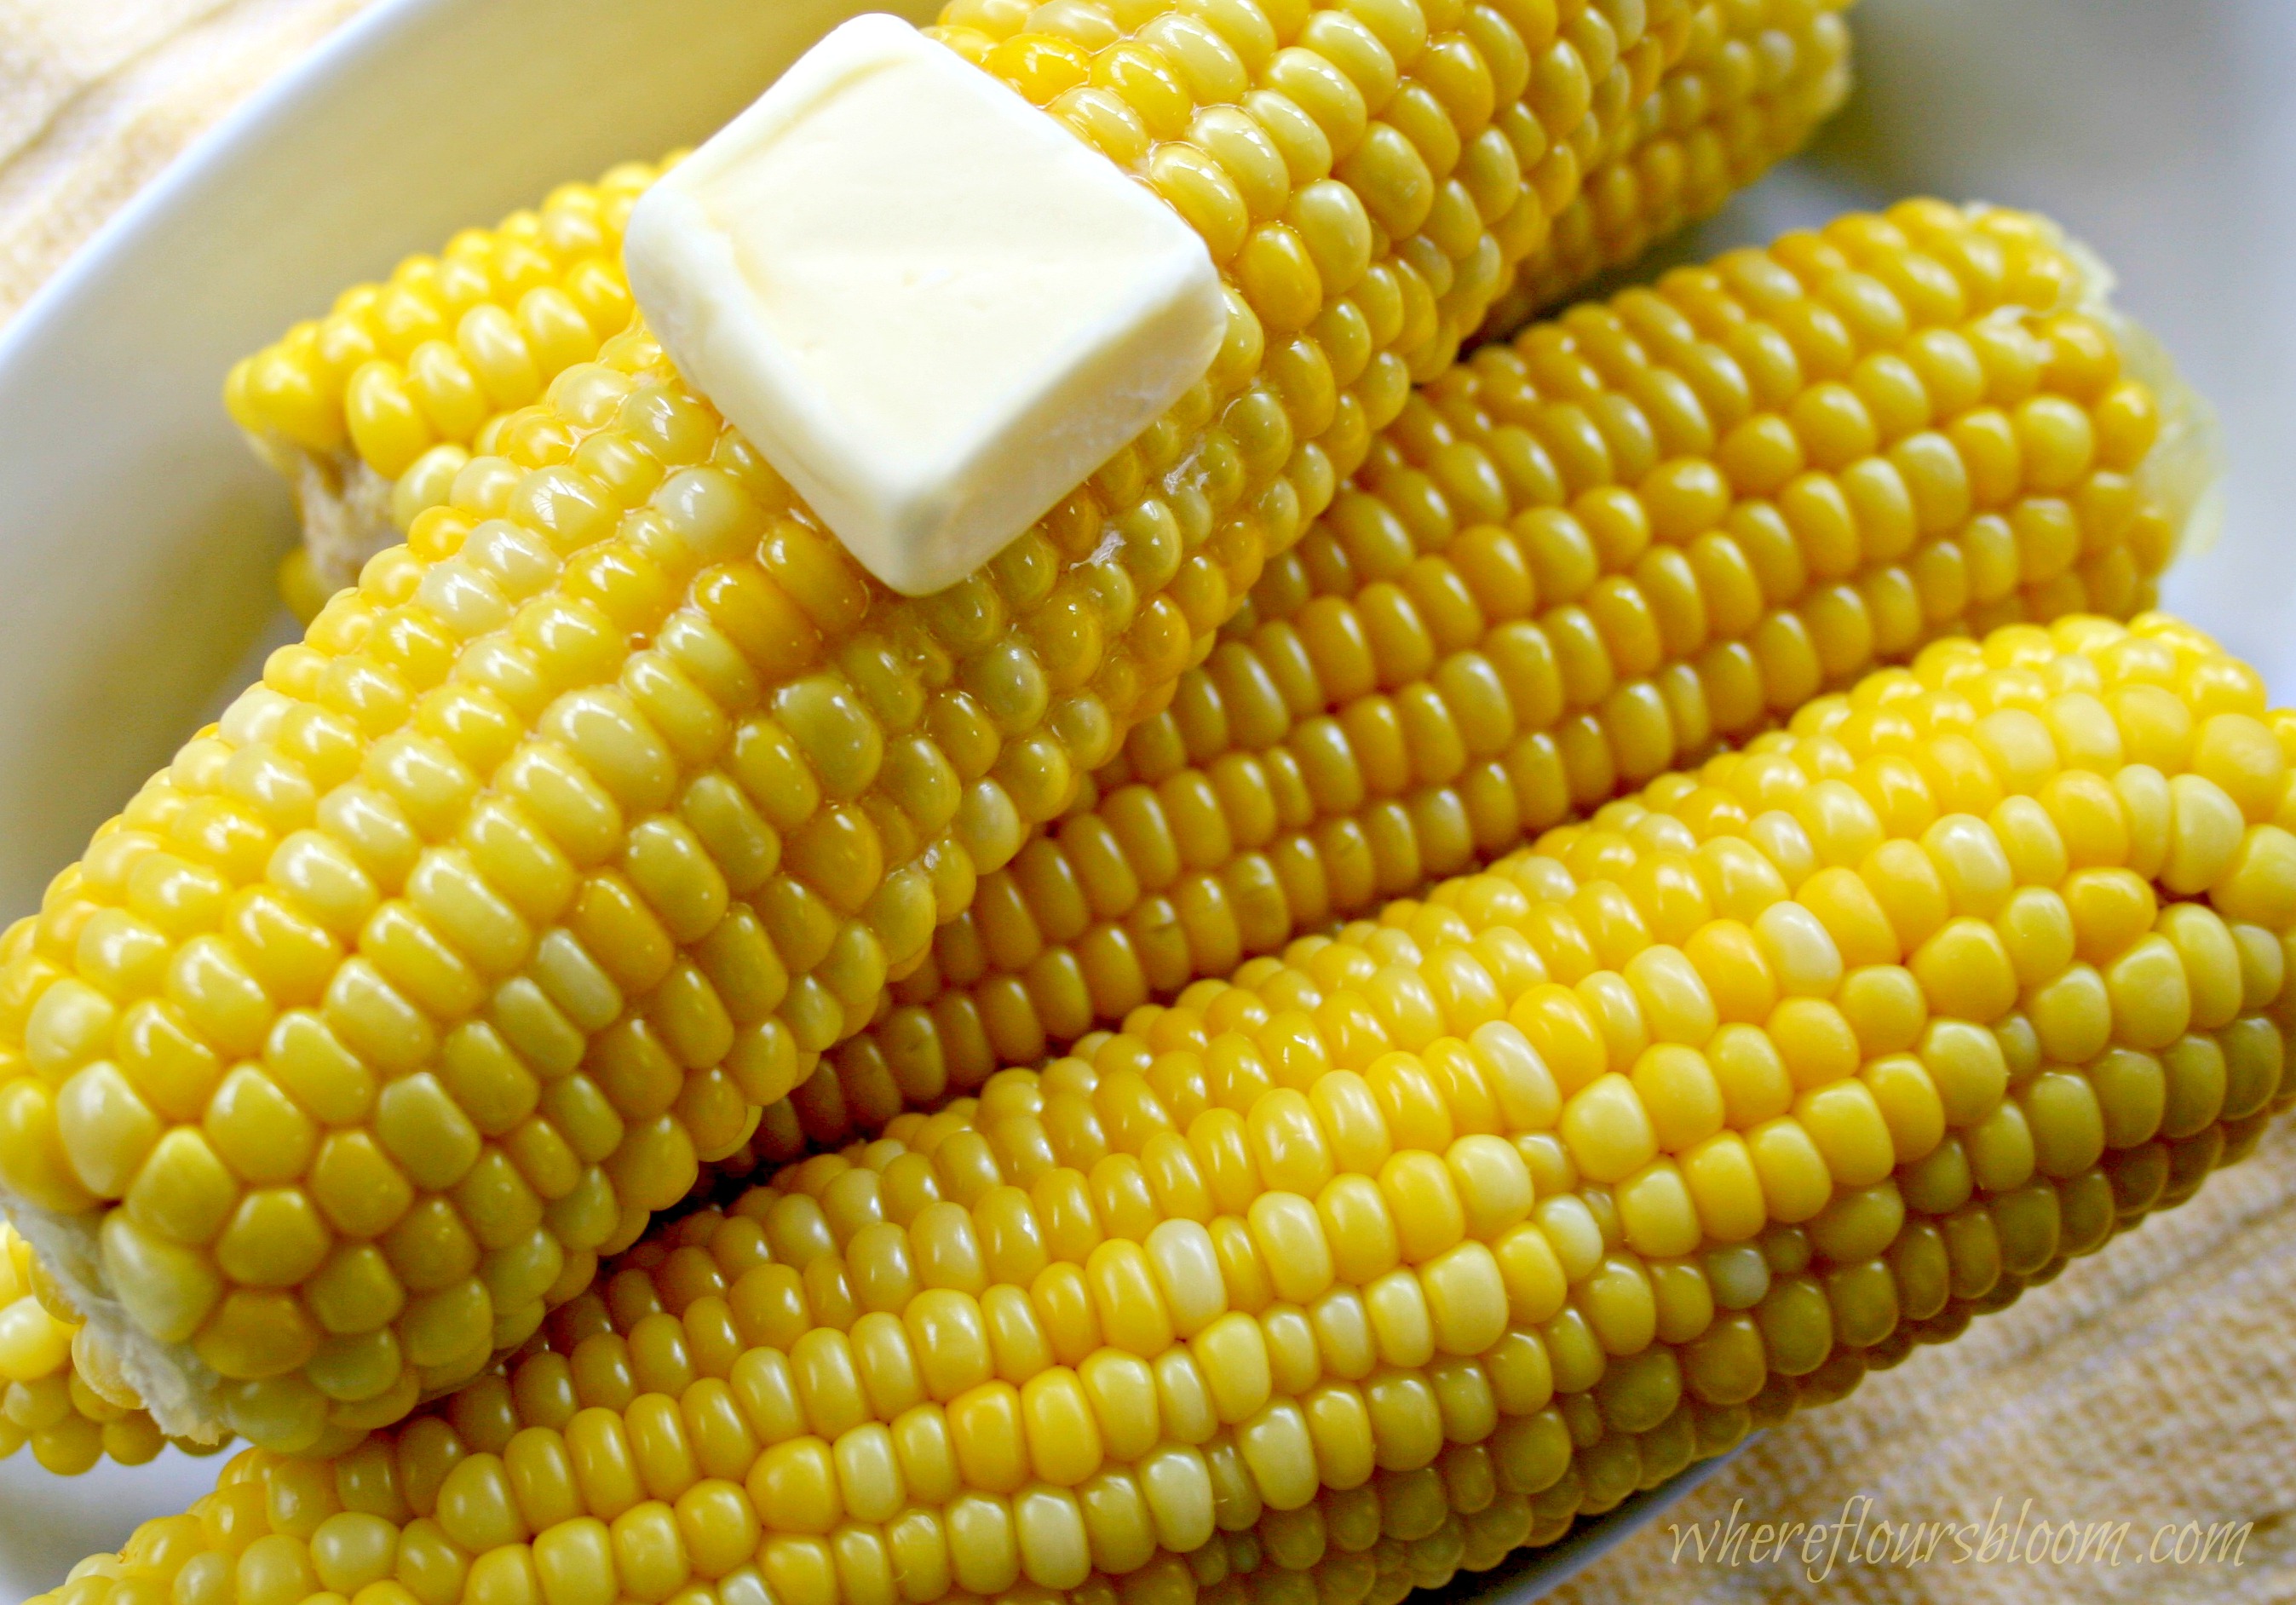 Corn me. Початок вареной кукурузы. Кукуруза в початках вареная. Сладкая вареная кукуруза. Кукуруза красивая.